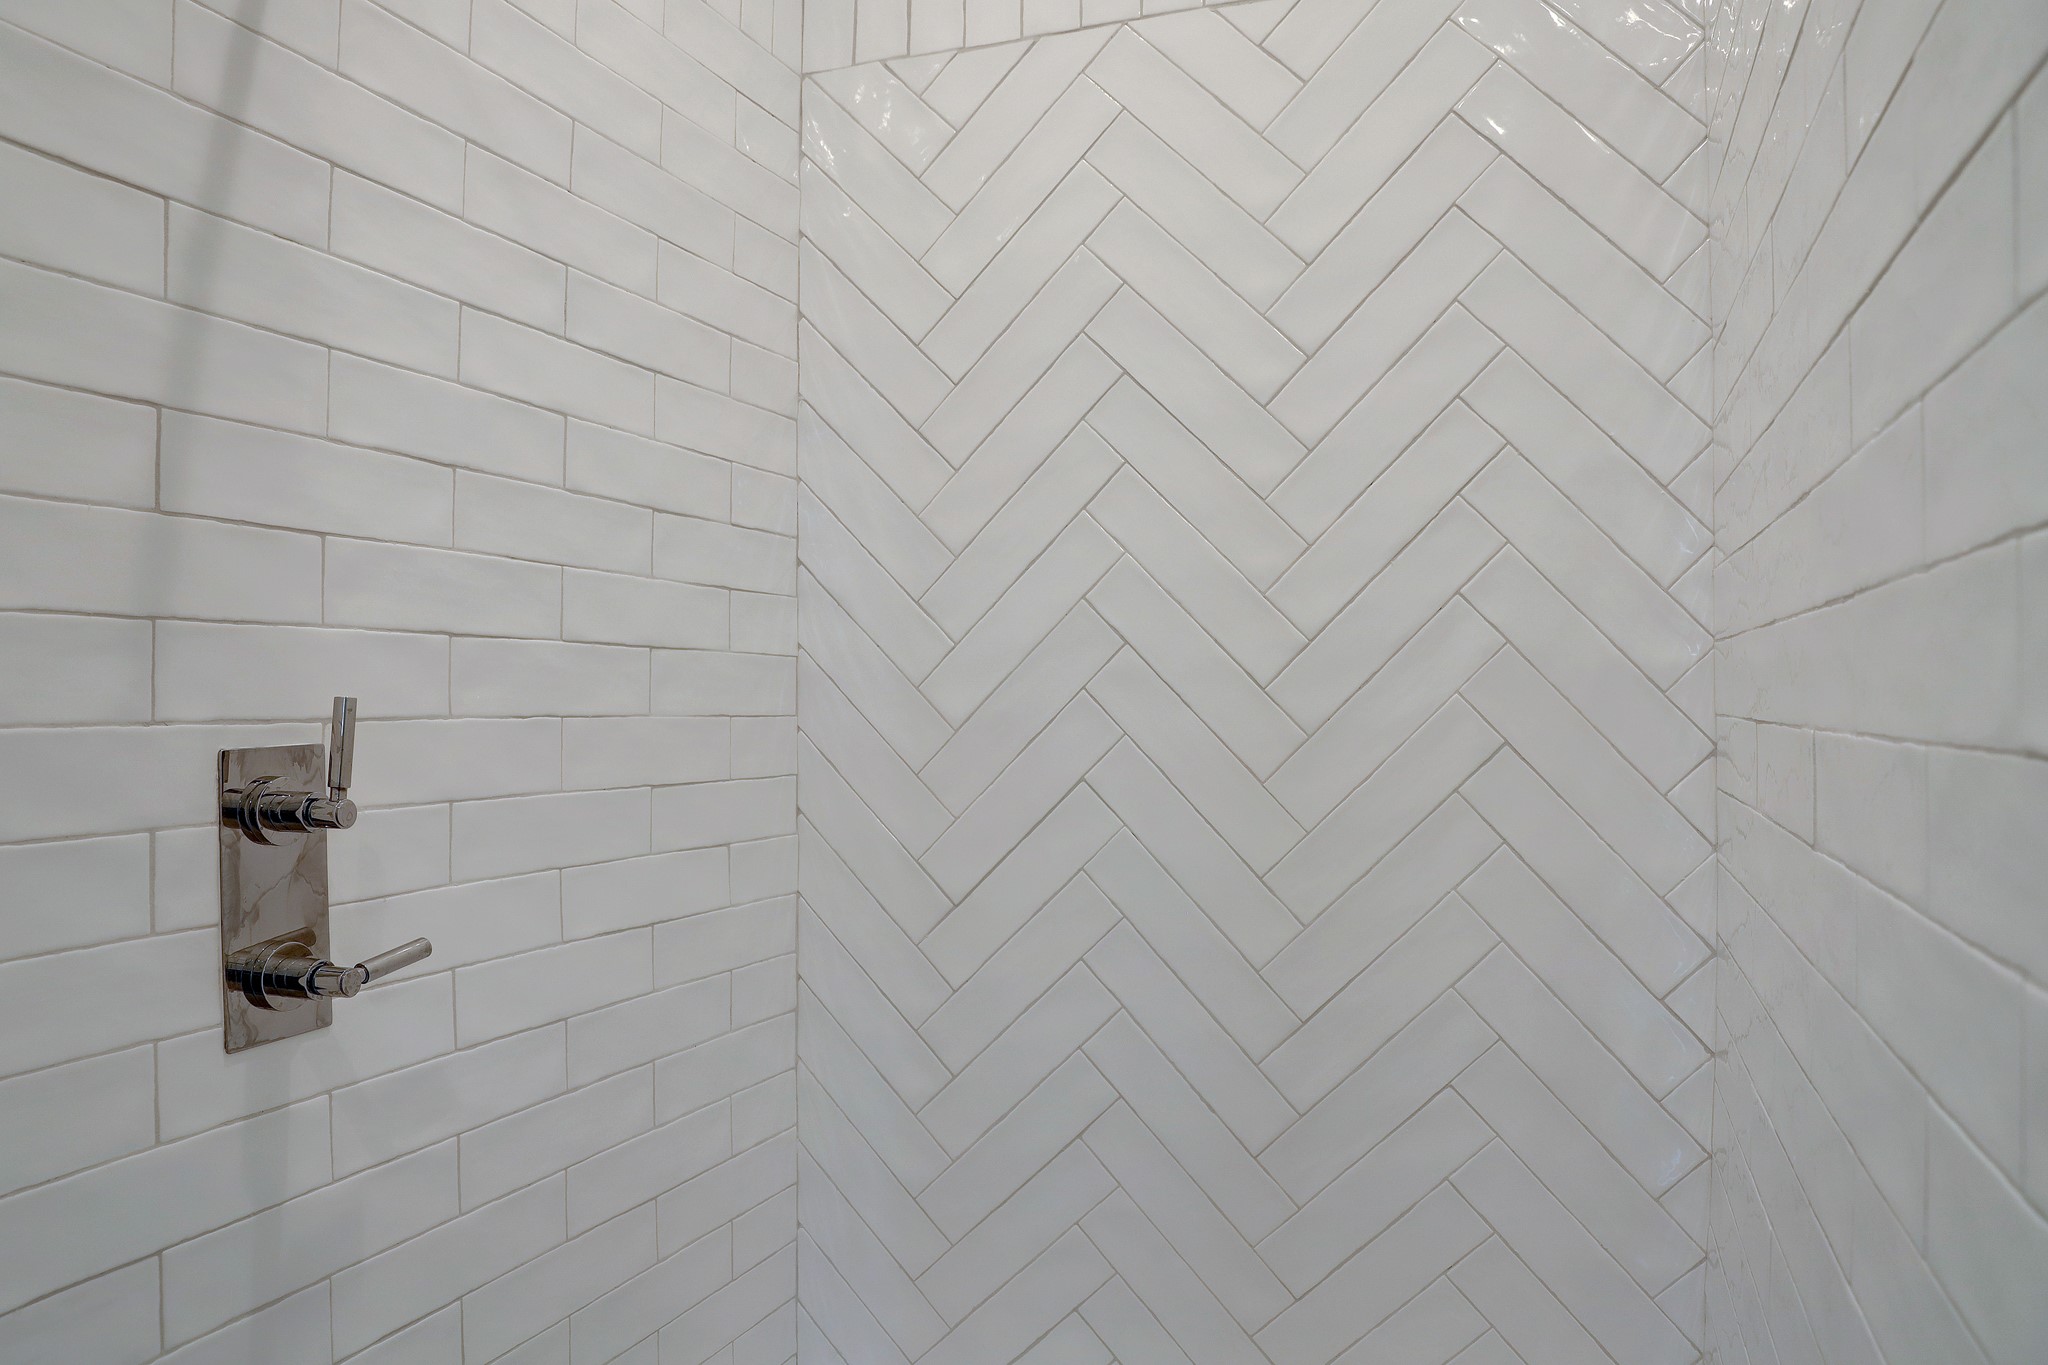 Third floor shower with herringbone patterened tile.